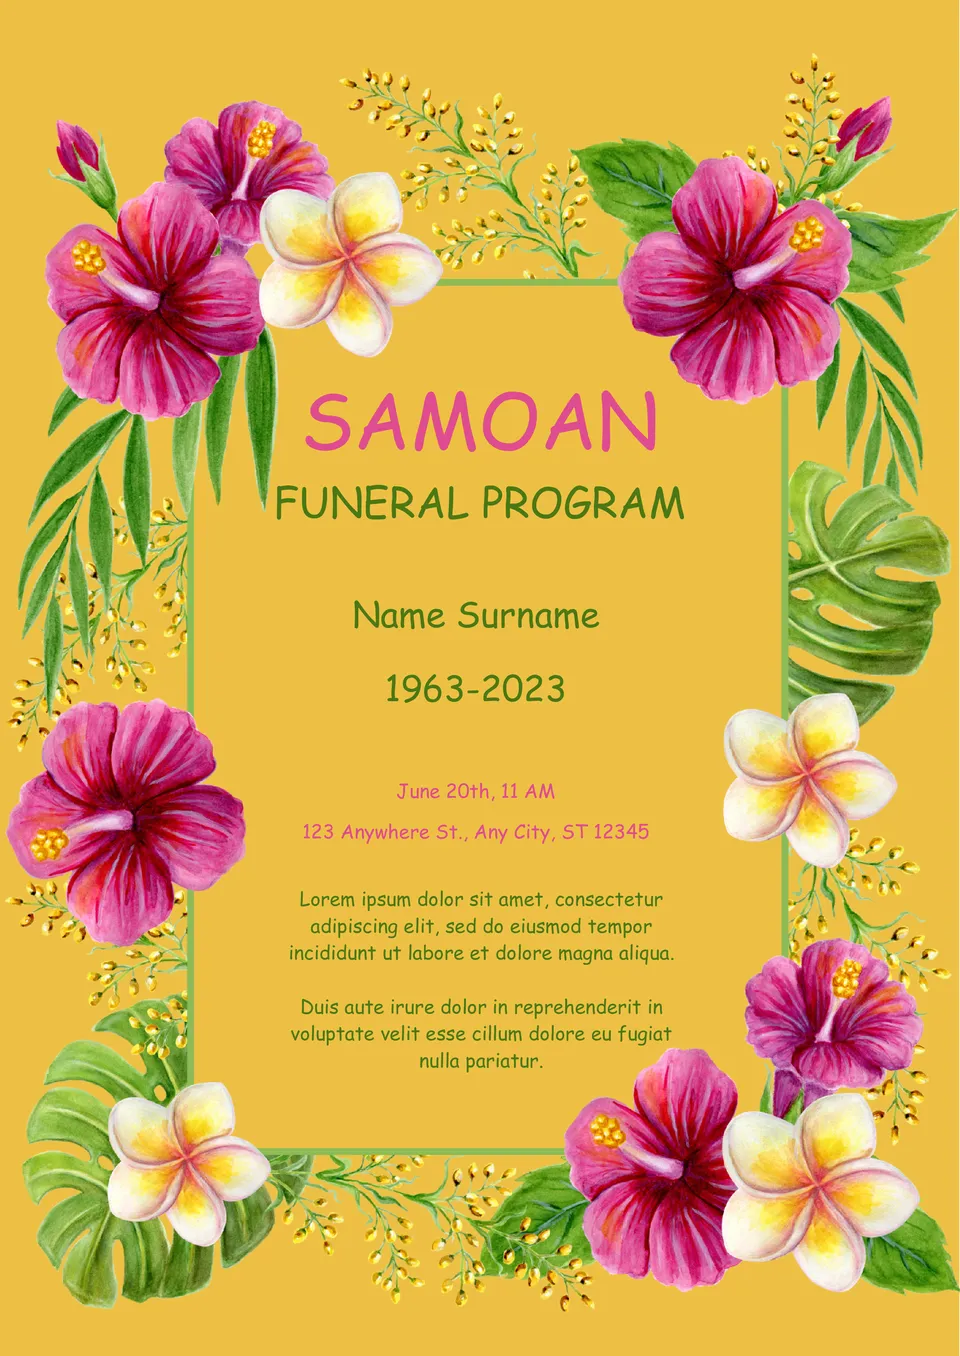 Samoan Funeral Program Template